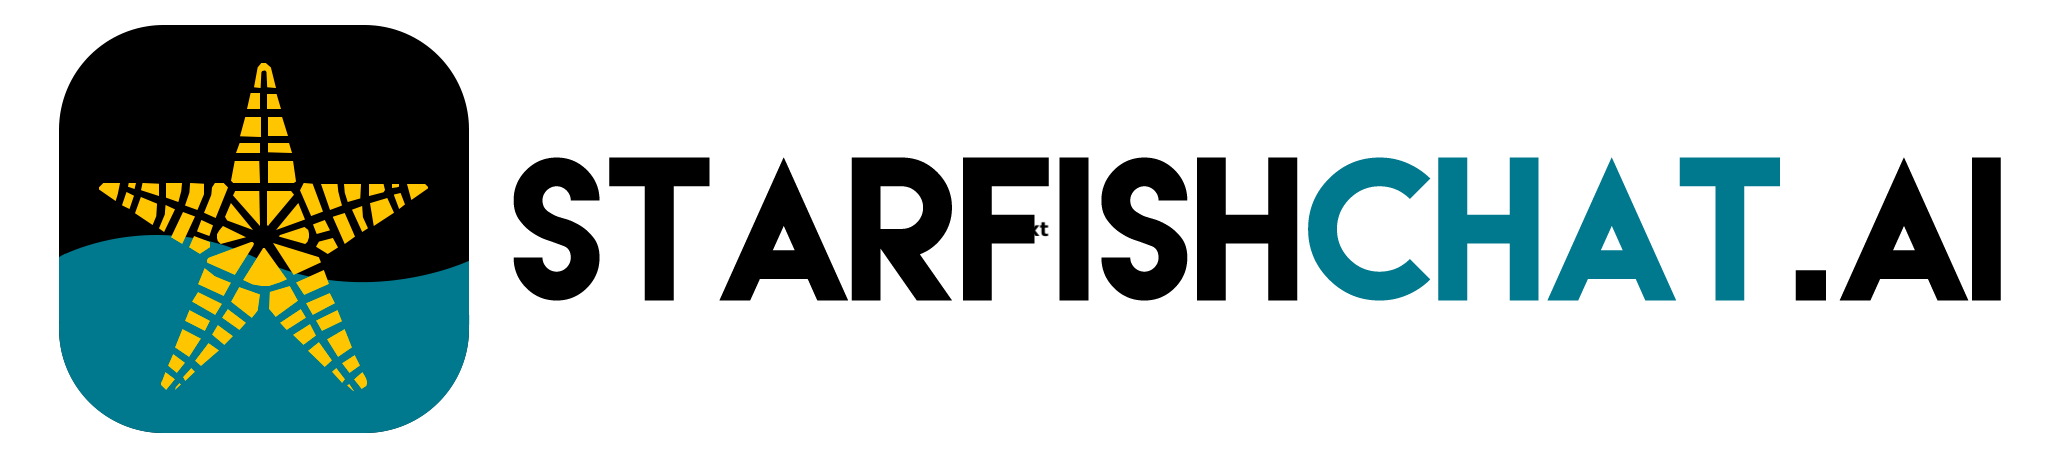 StarfishChat.ai Text Icon Logo